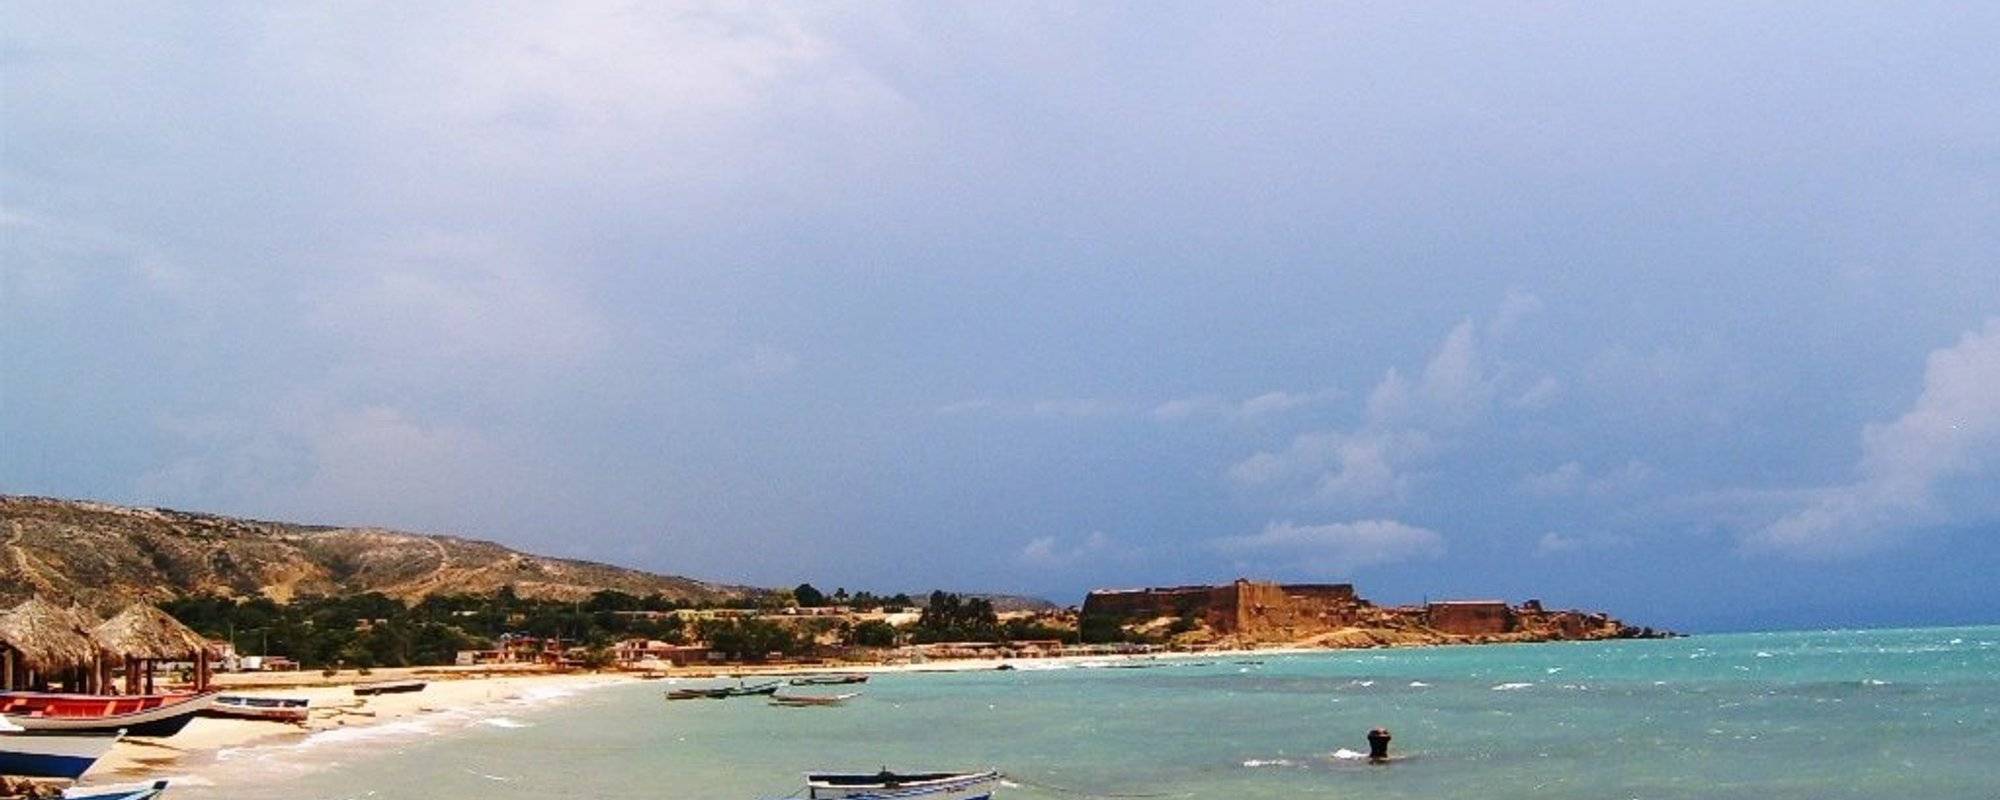 Araya: beach tourism and salt history